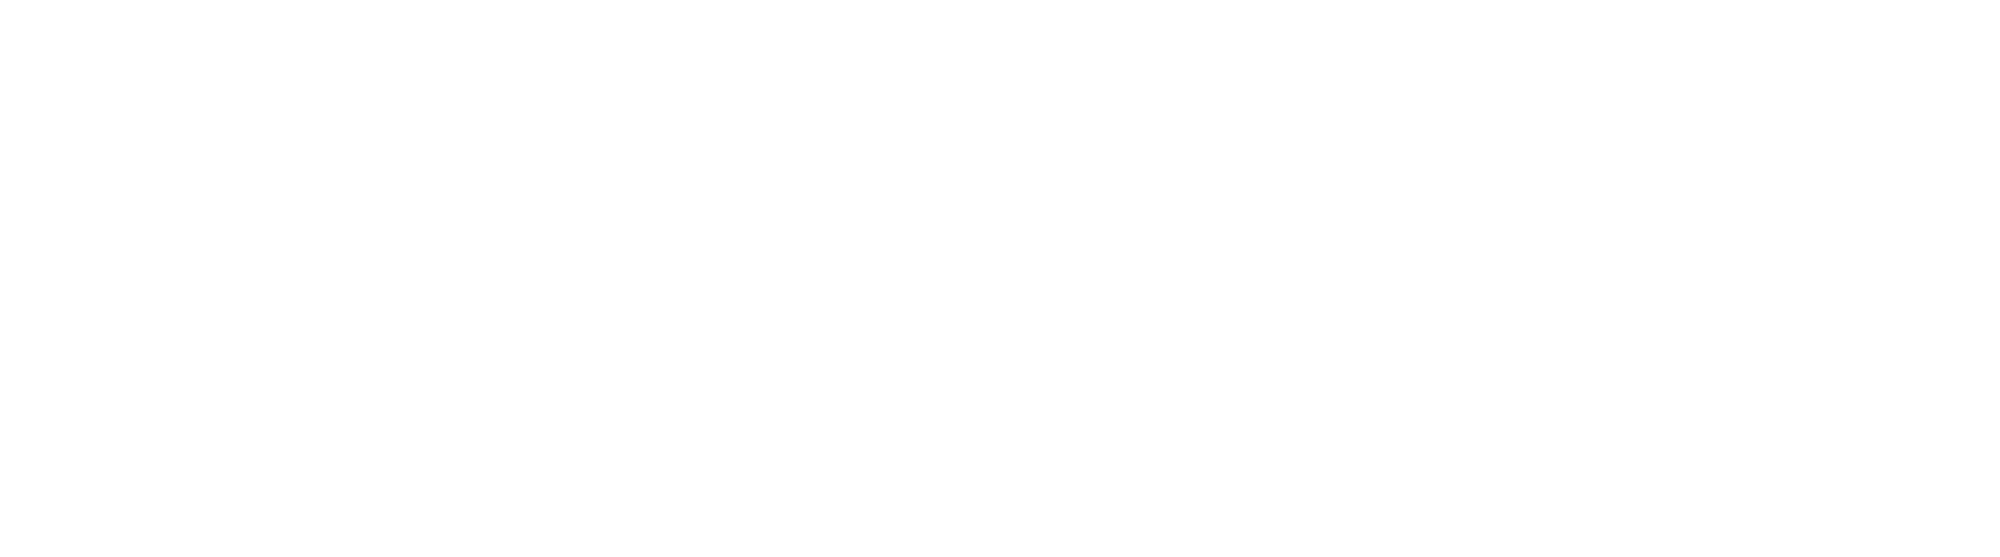 LINEMO eSIM「超」入門ガイド